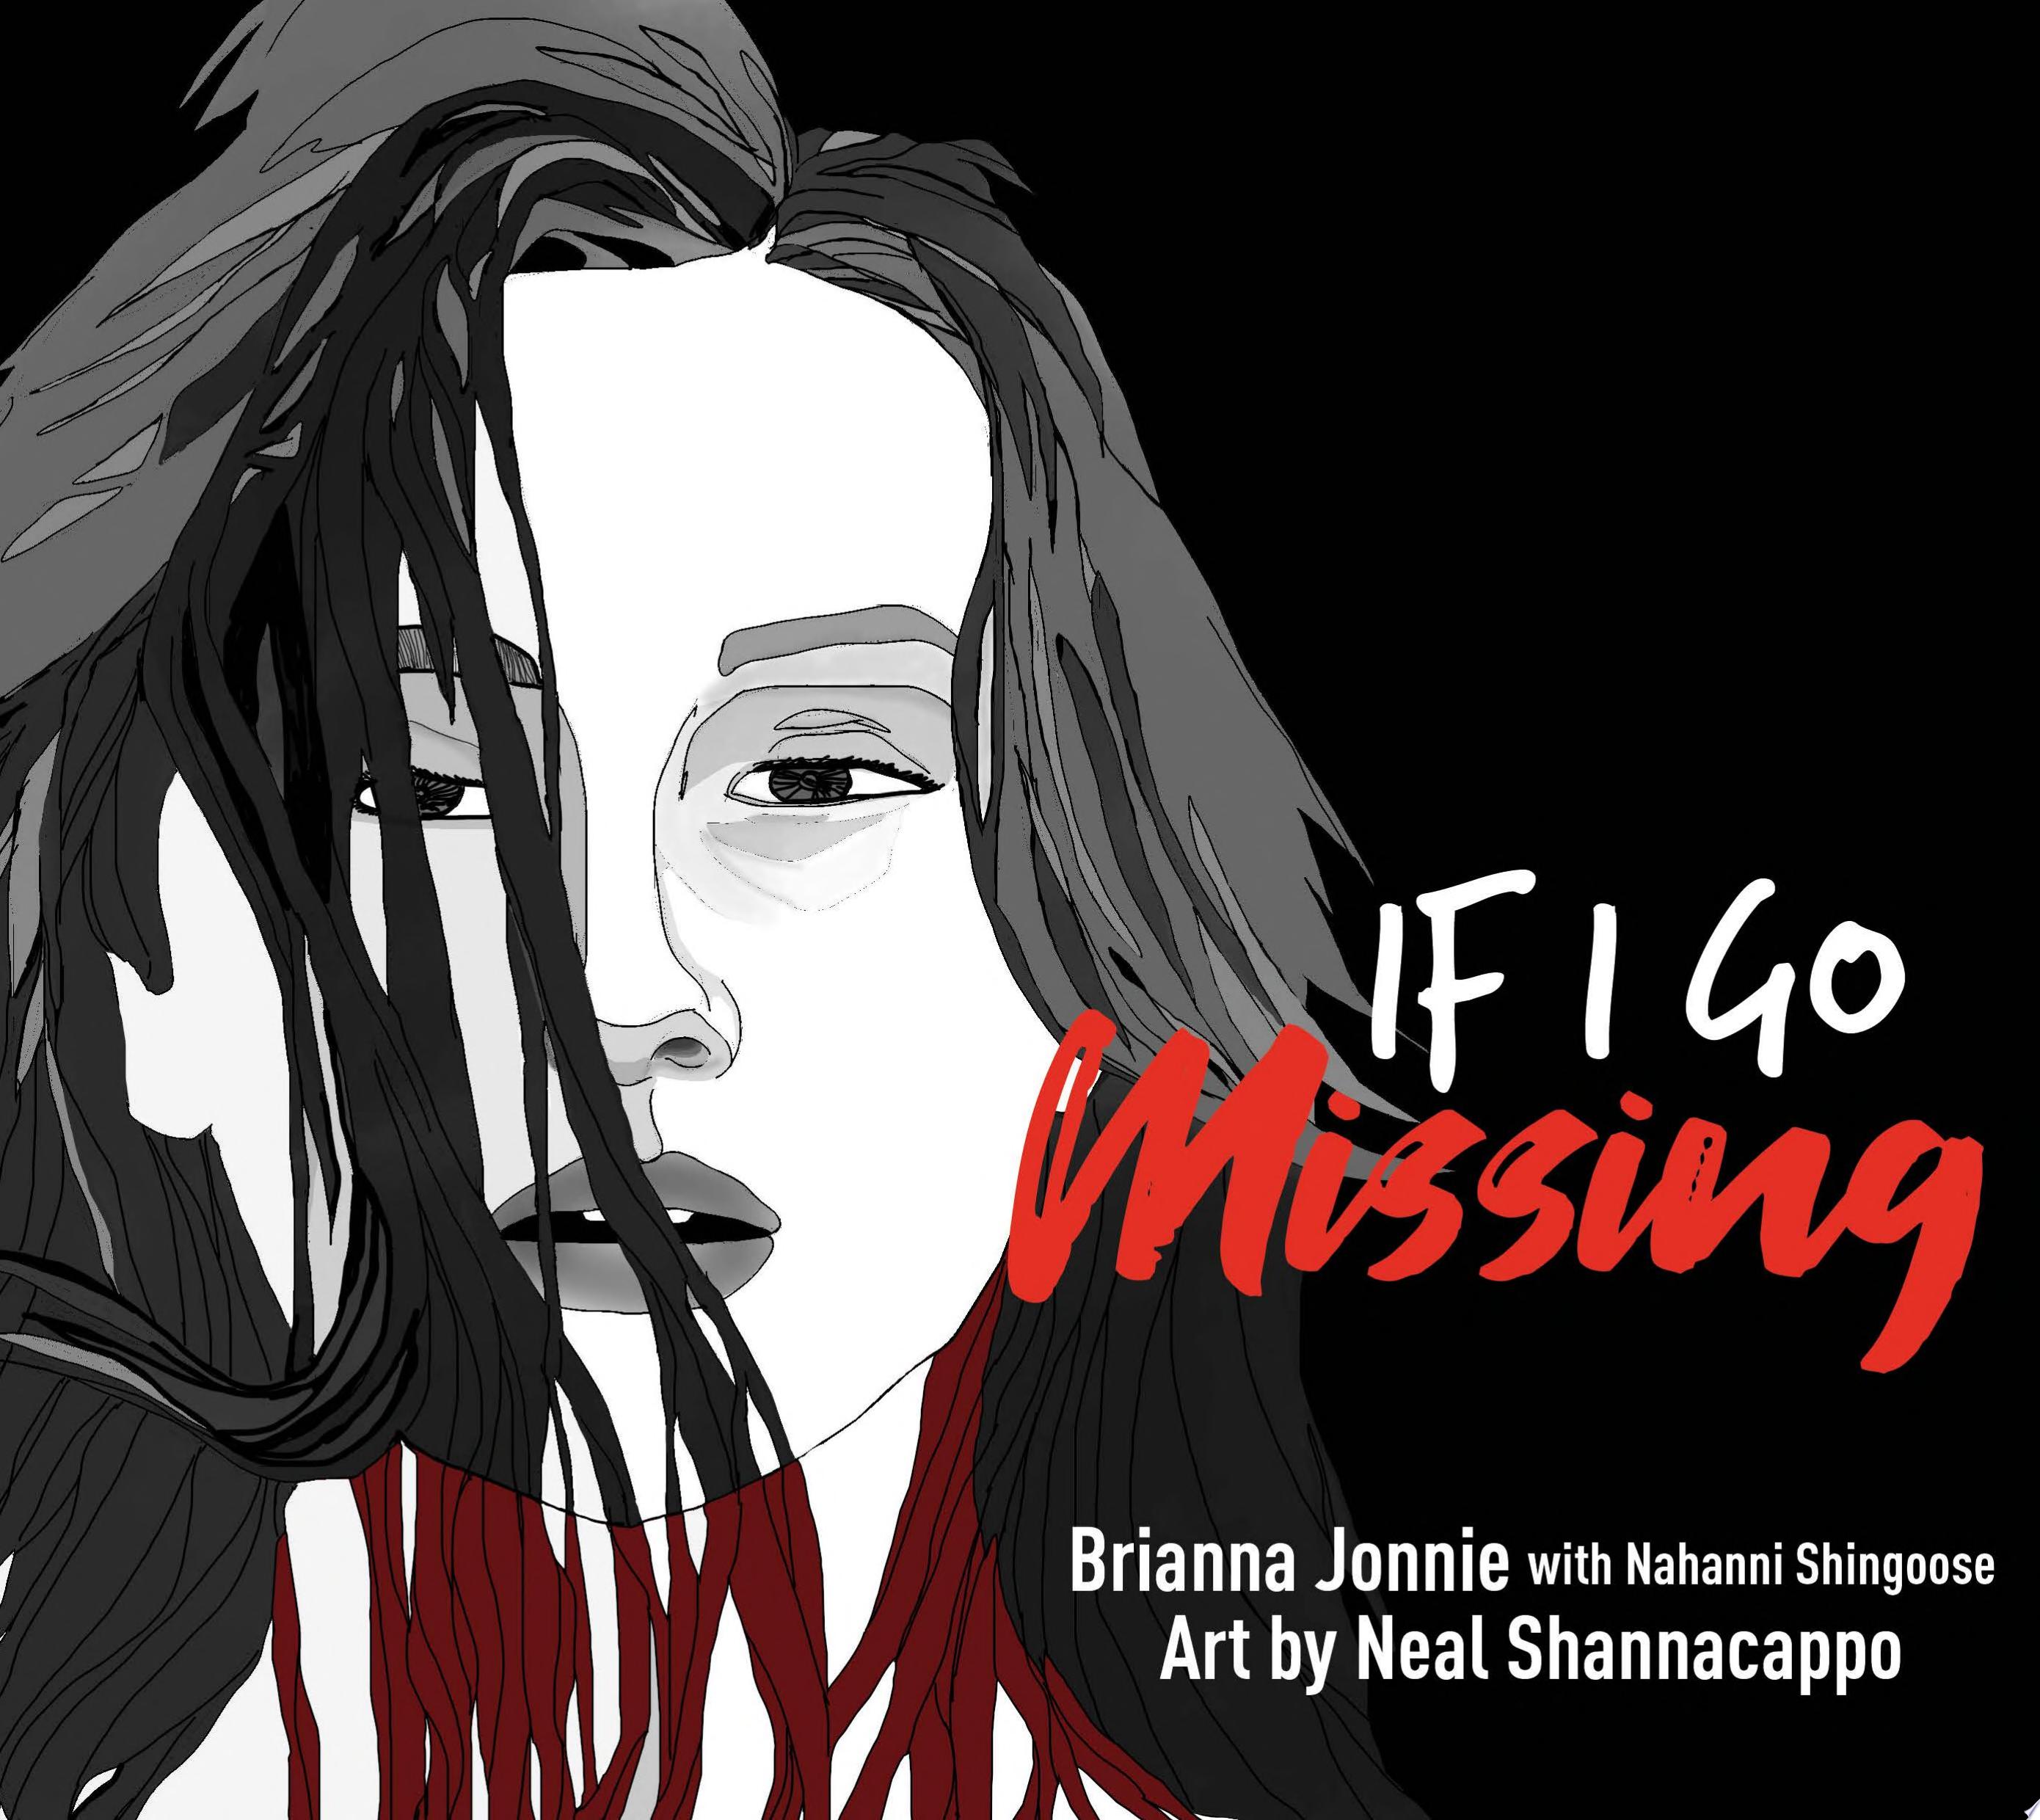 Image for "If I Go Missing"